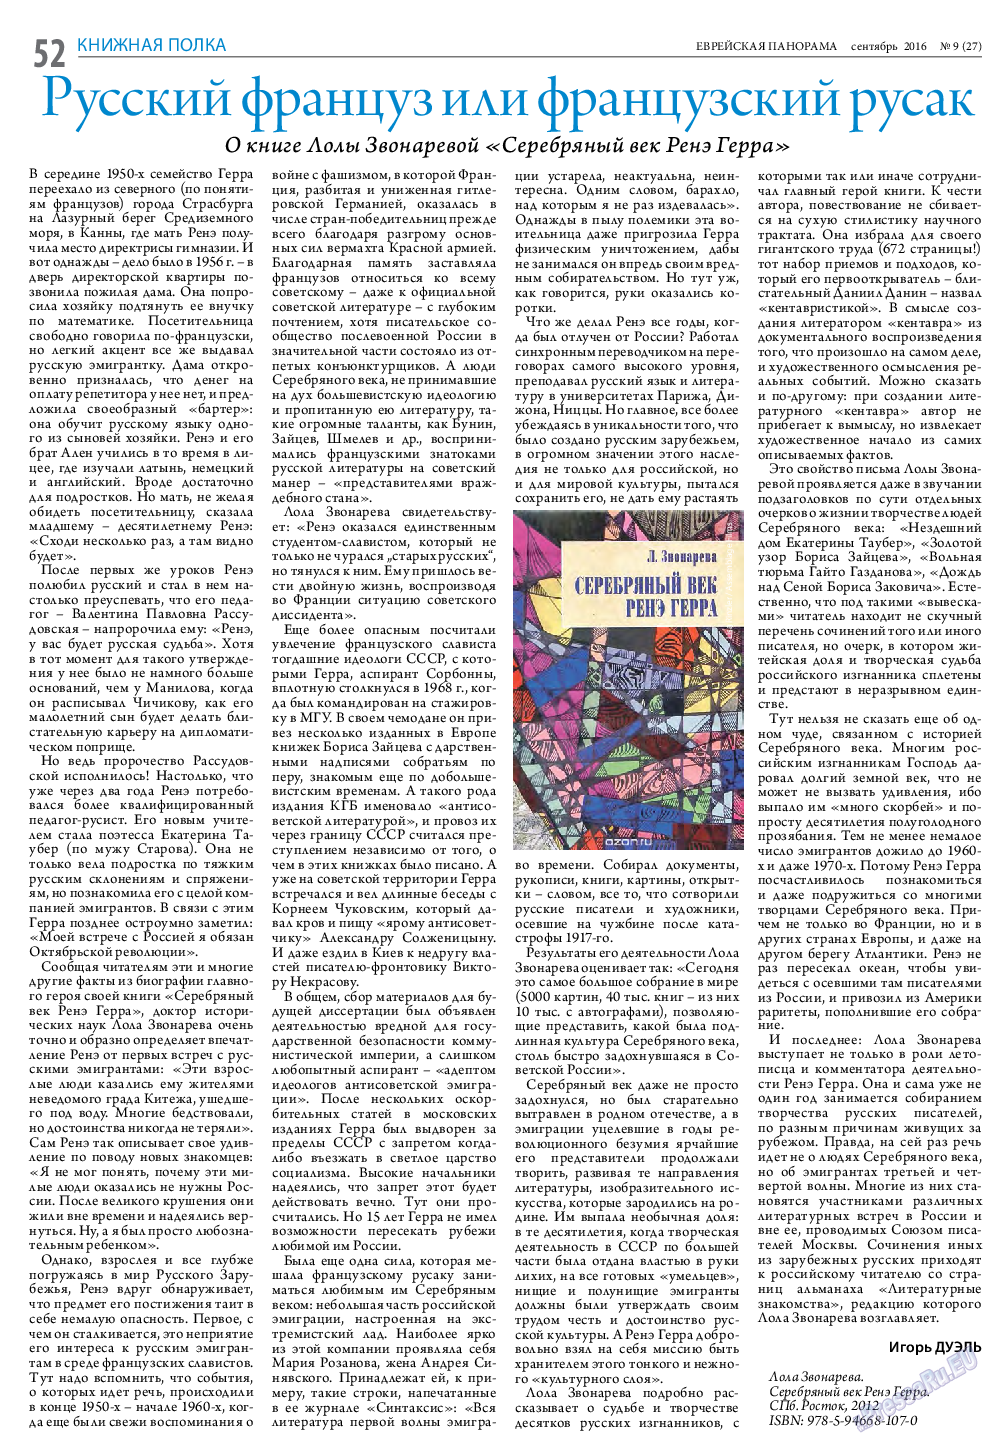 Еврейская панорама, газета. 2016 №9 стр.52